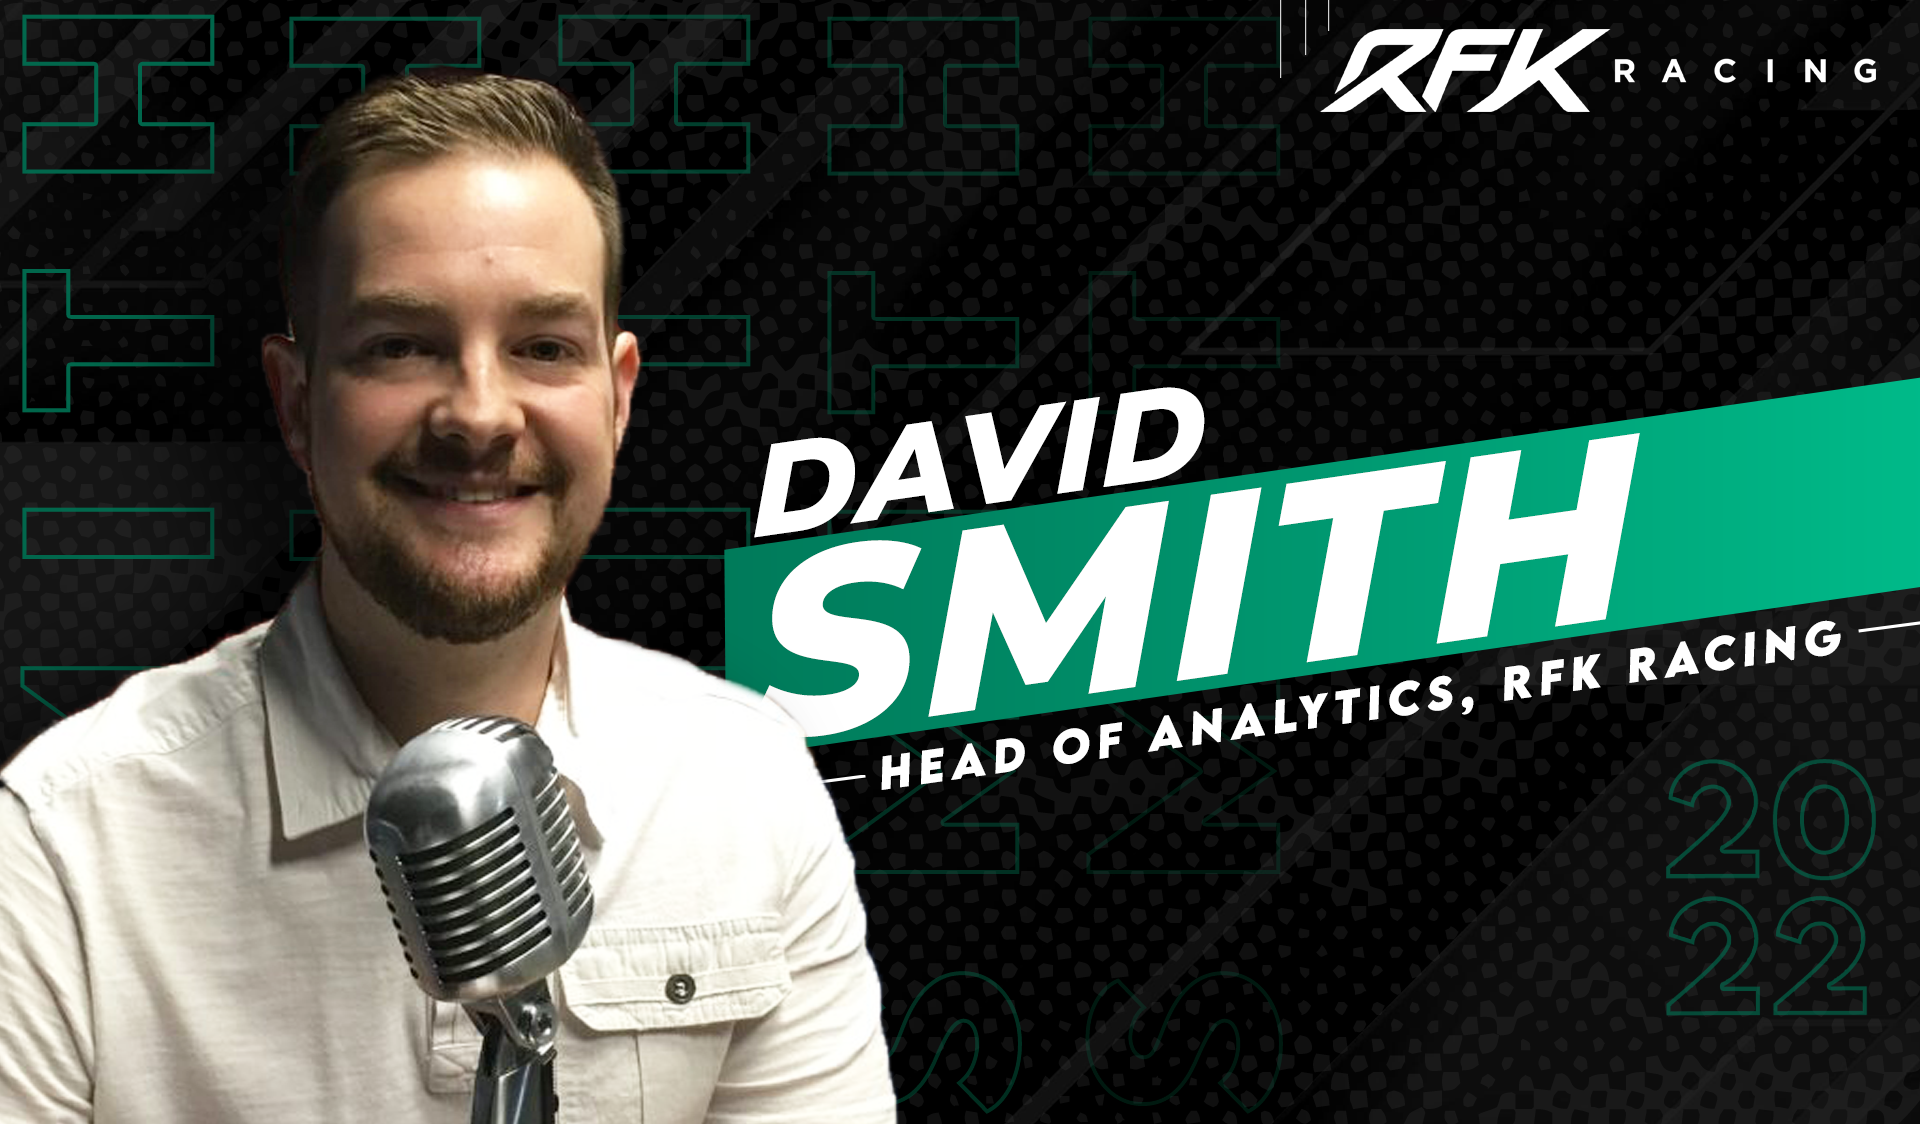 RFK Racing Tabs Esteemed Statistical Analyst David Smith as Team’s Head of Analytics